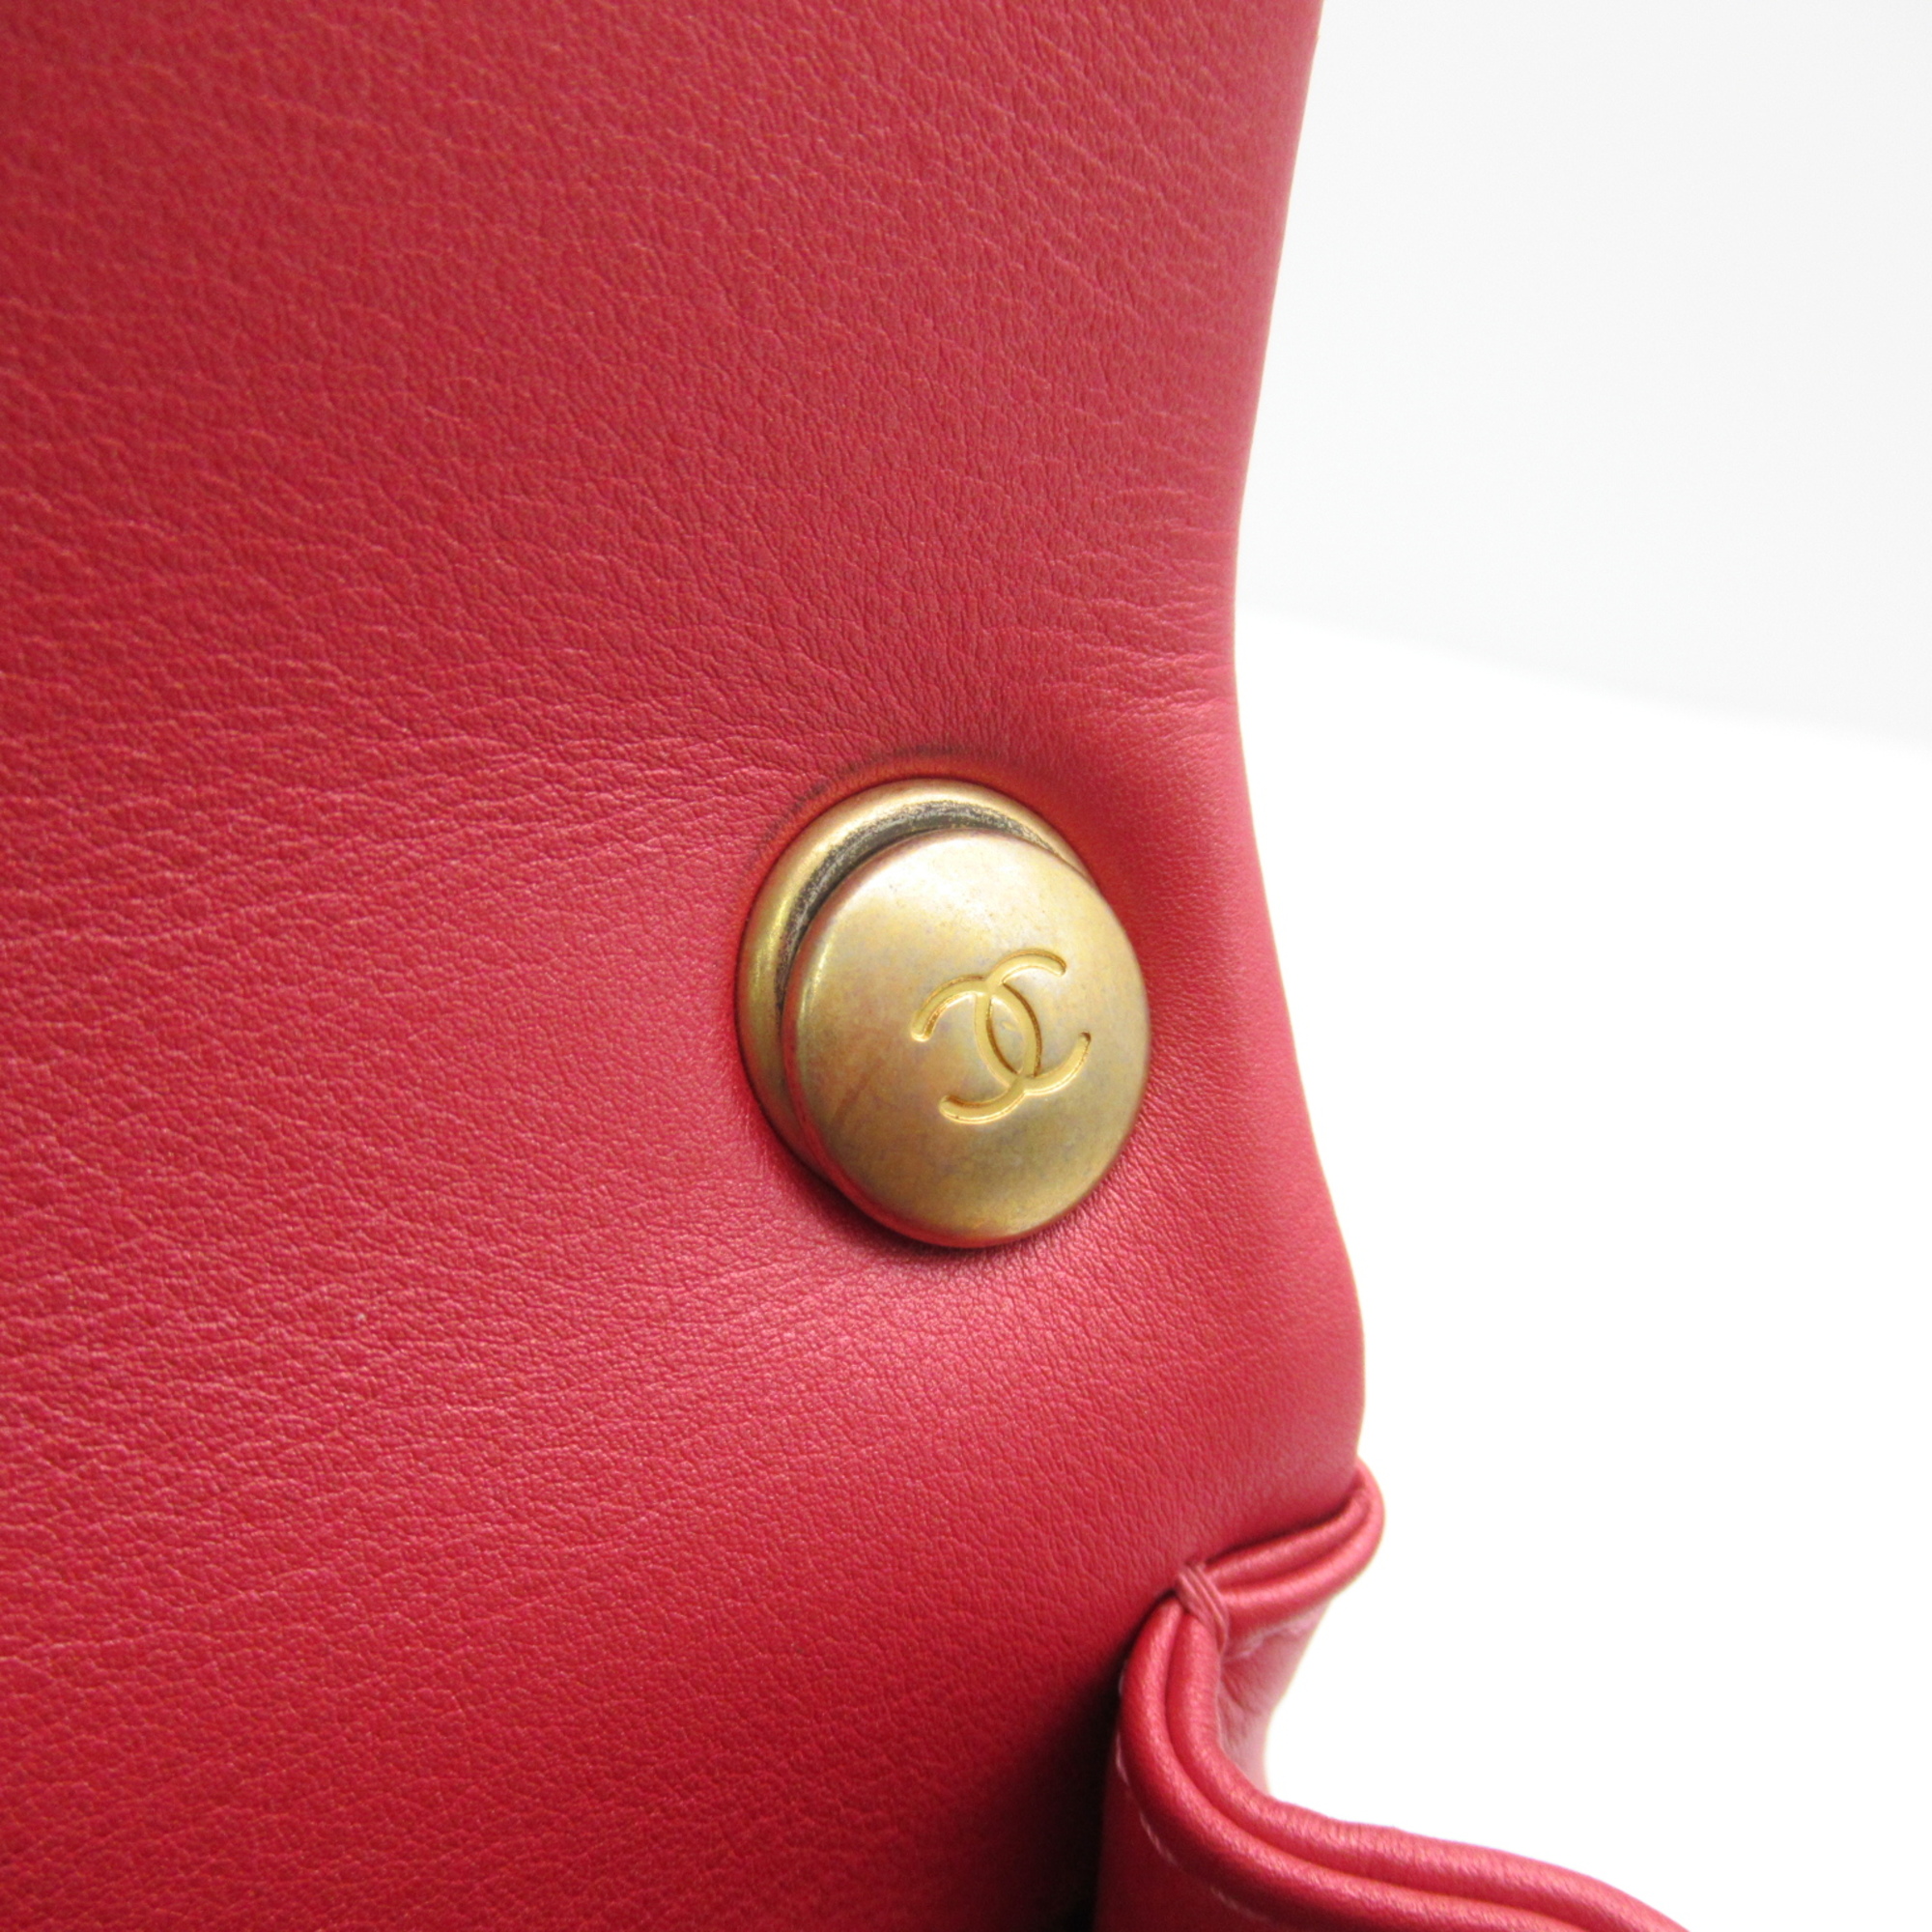 CHANEL Mini Matelasse ChainShoulder Bag Red leather